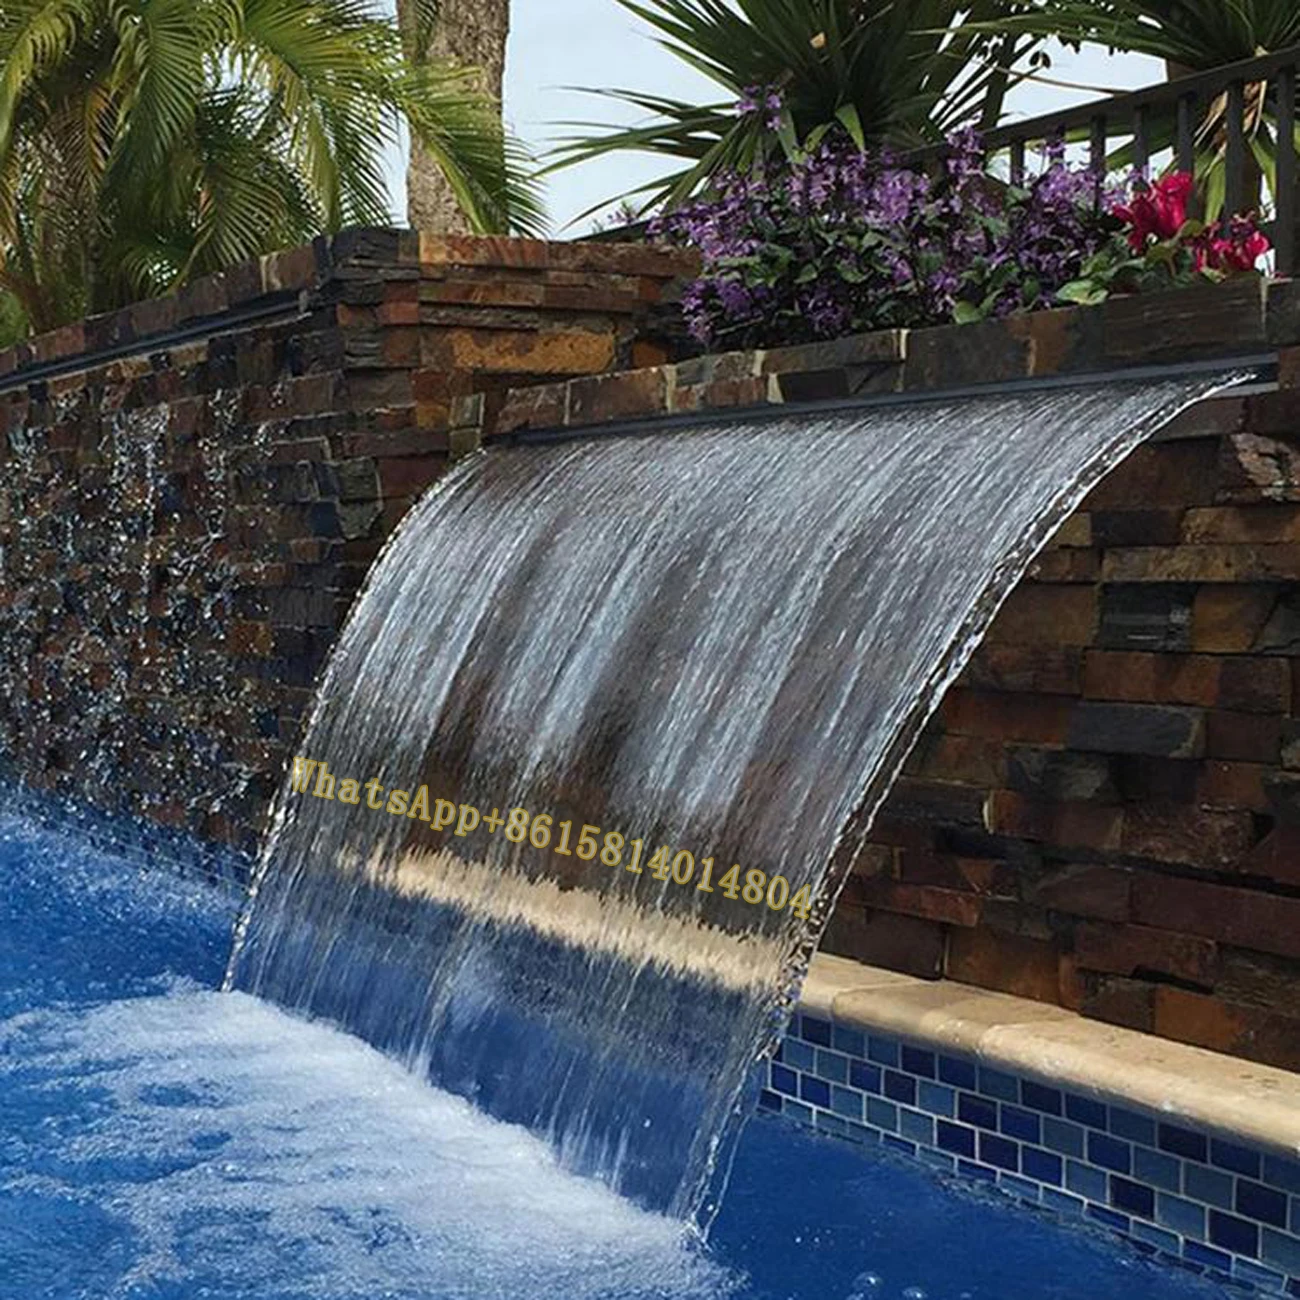 Wasserfall-Brunnen Pool Spa Teich Wasserfall-Brunnen Sprayer Pool Anzeige Fountain Rahmen Pool Decor